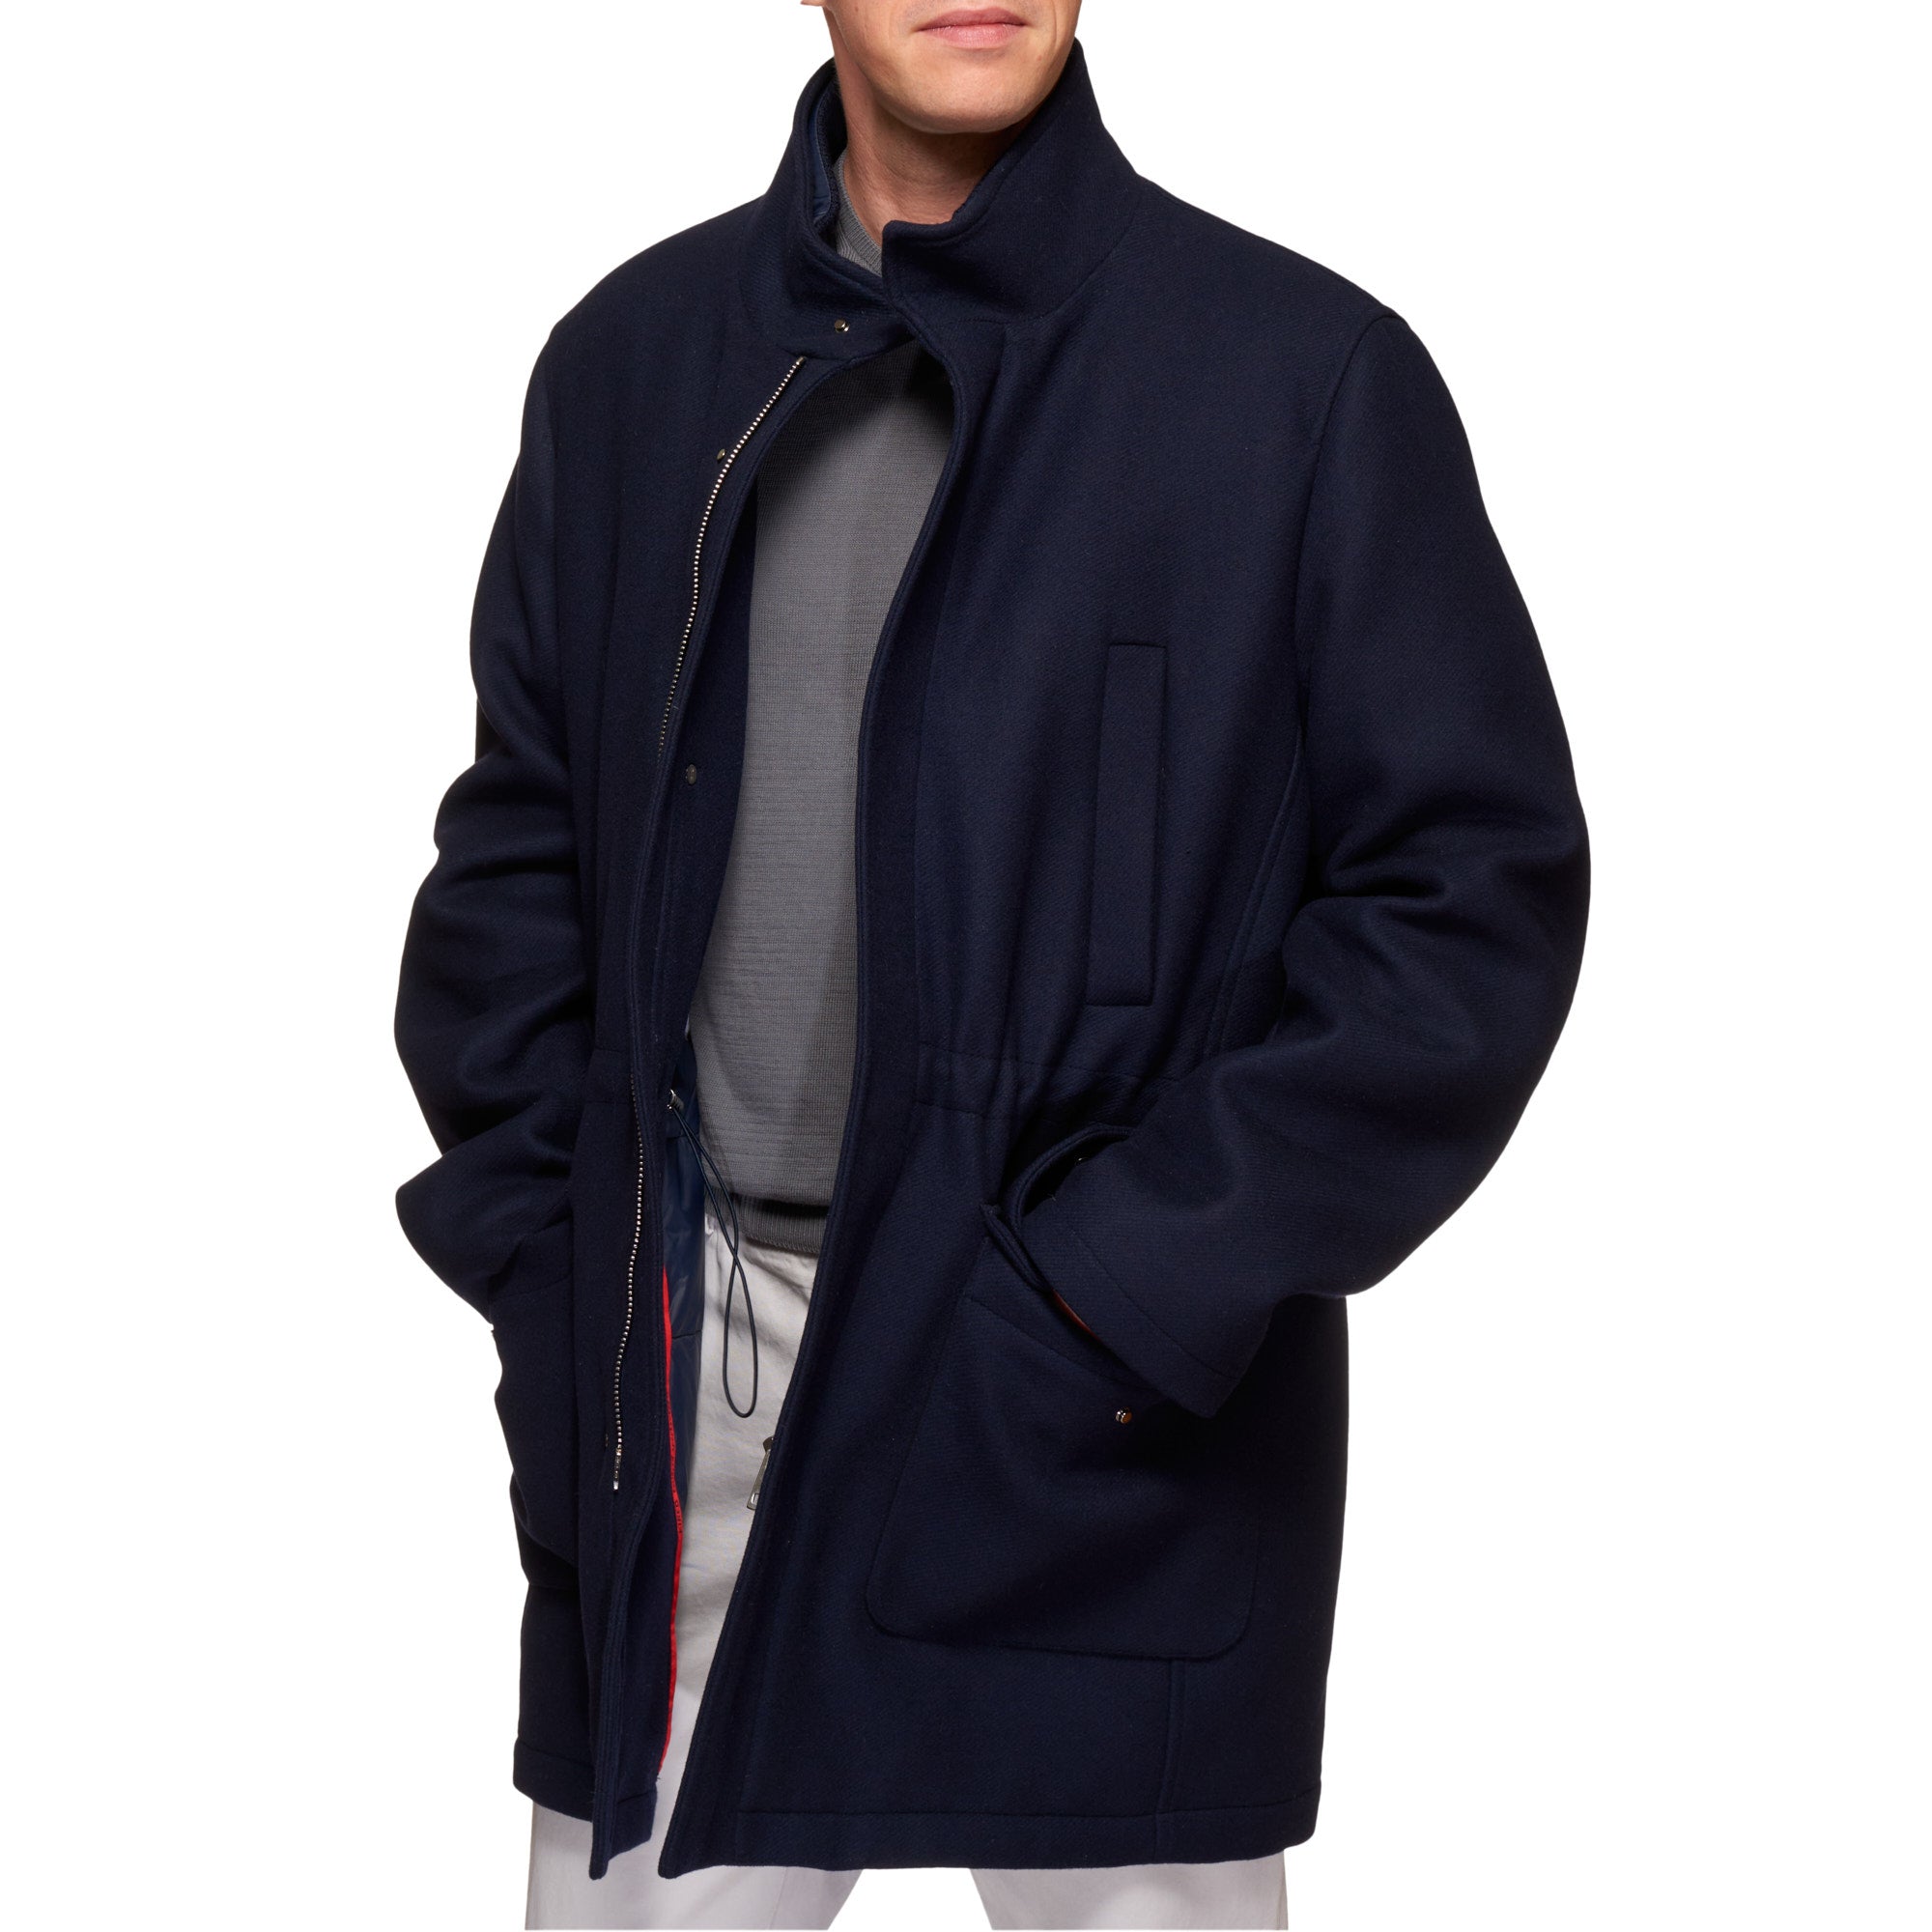 KITON KIRED "Pizzo" Navy Blue Wool-Cashmere Padded Parka Jacket Coat KIRED